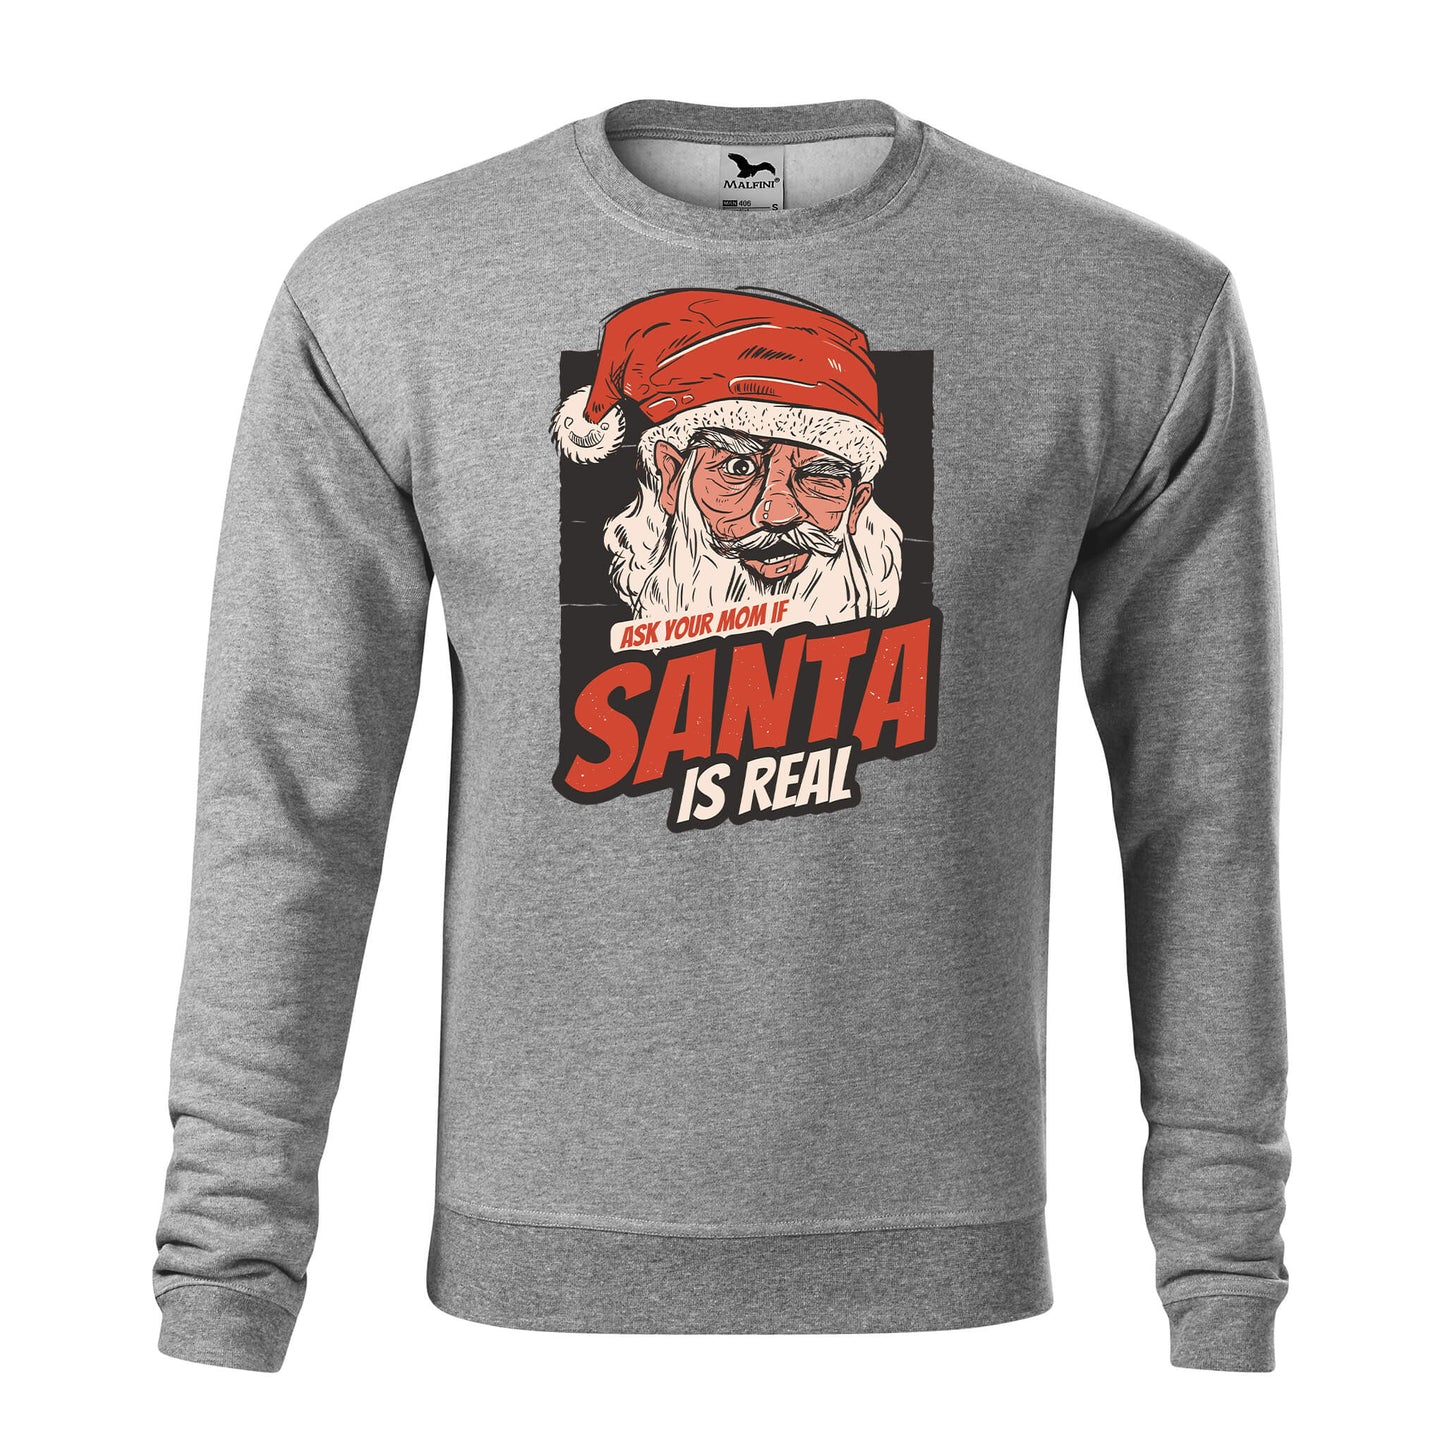 Ask your mom if santa is real sweatshirt - mens